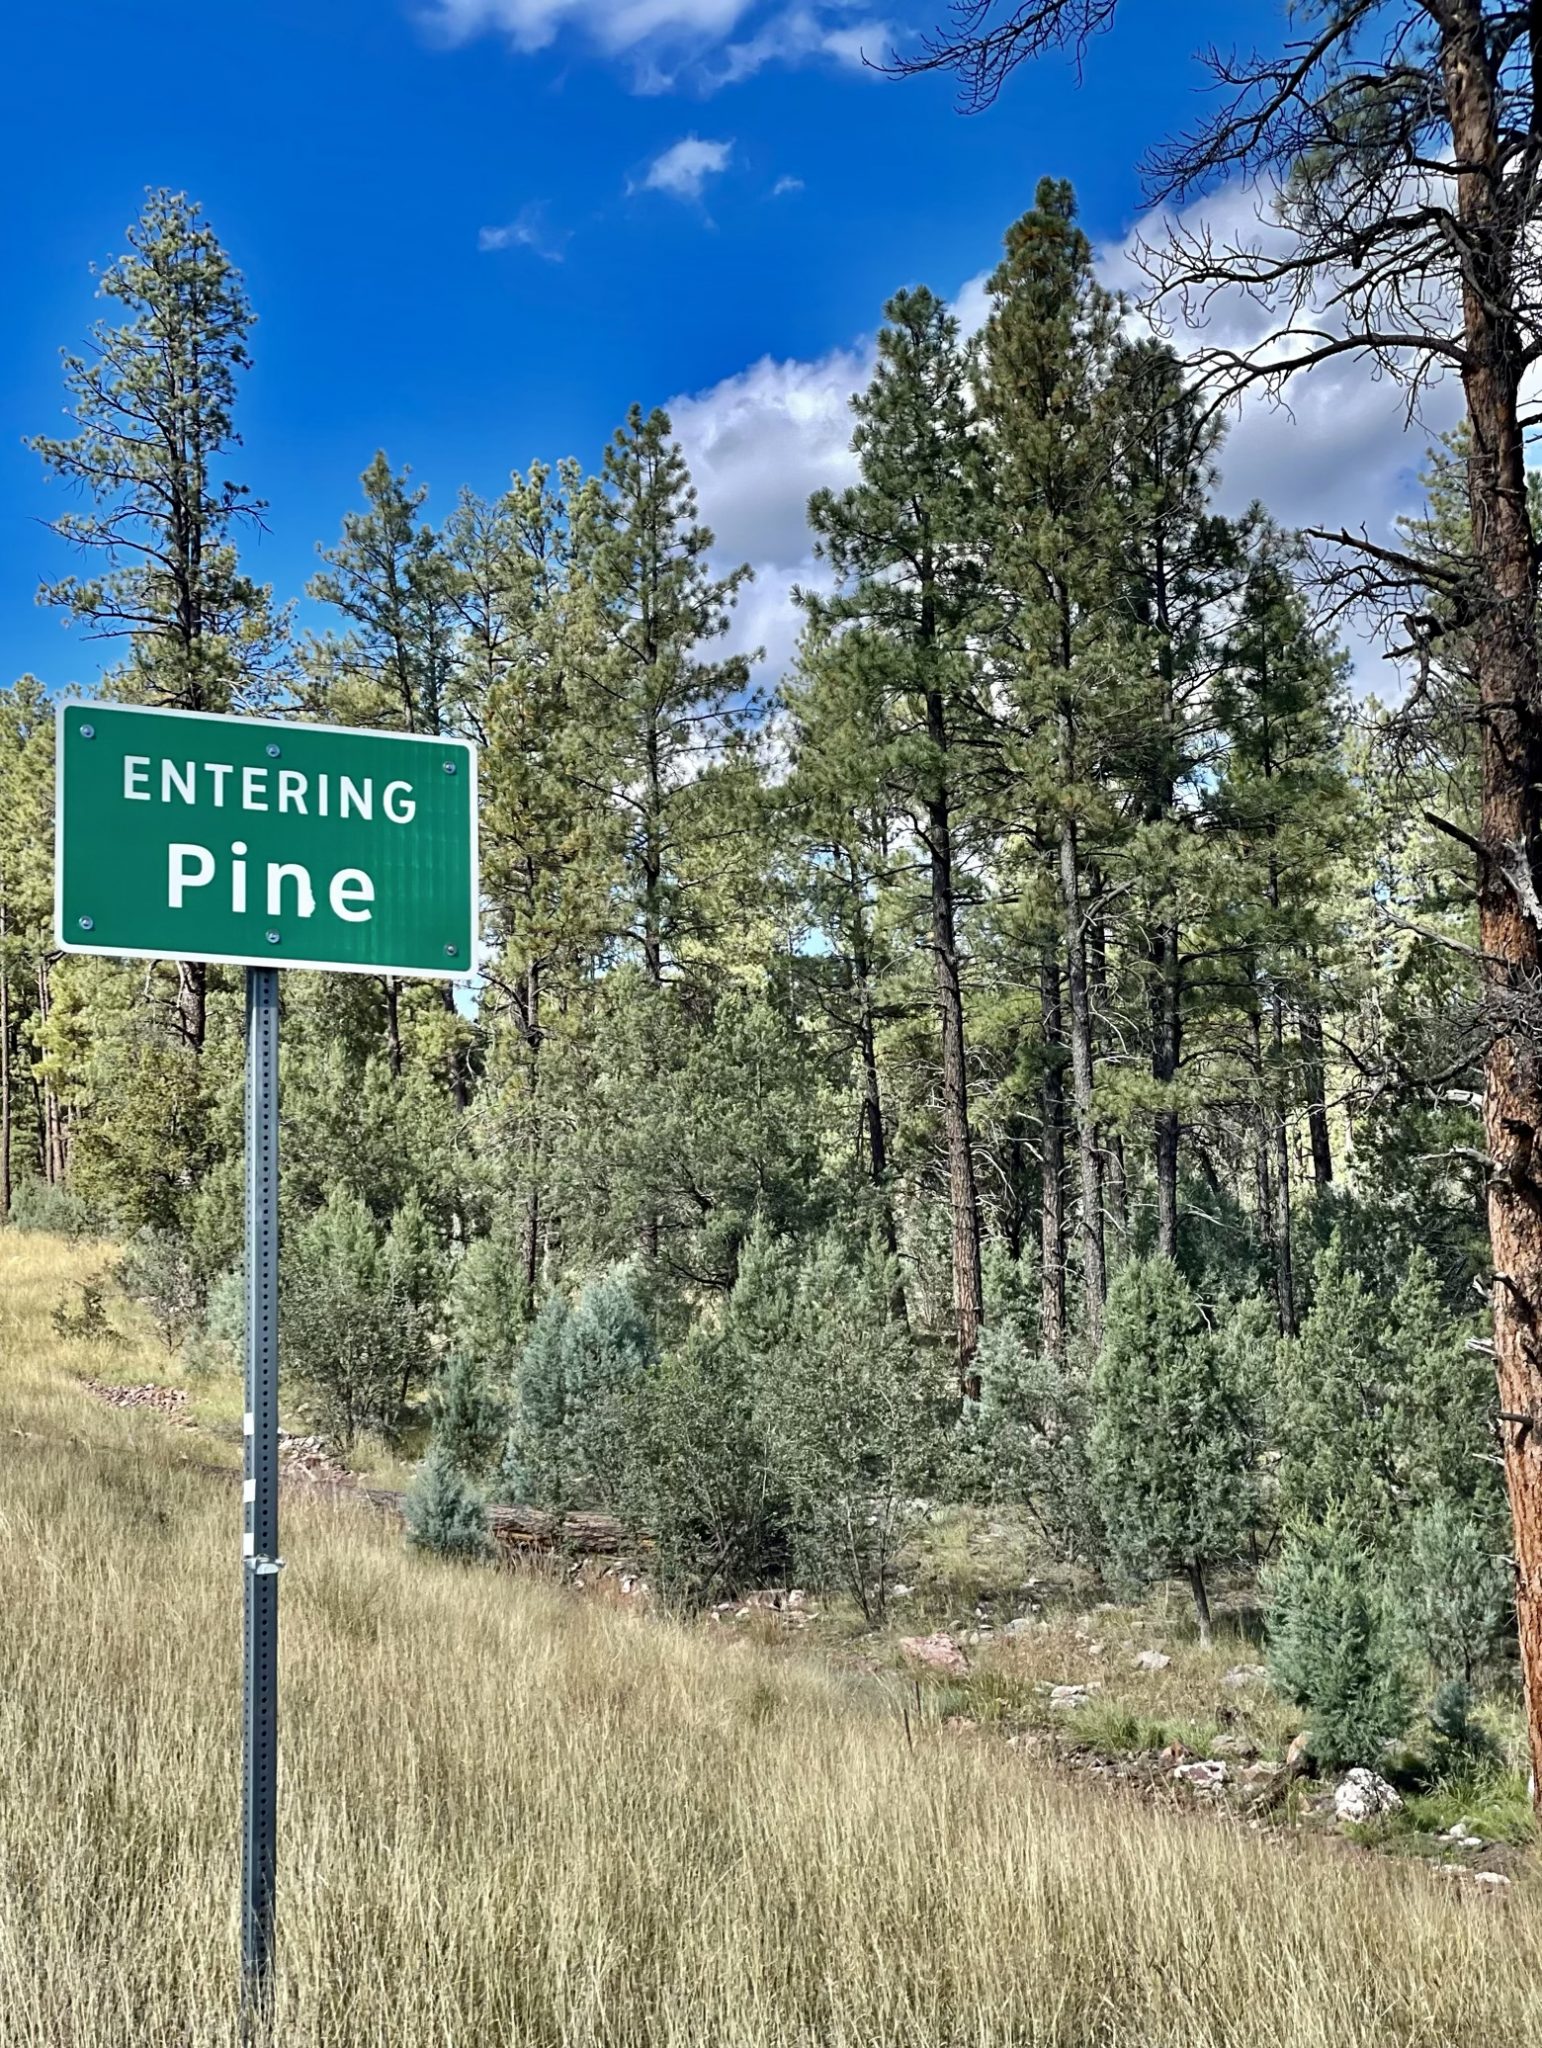 The aptly named Pine, Arizona